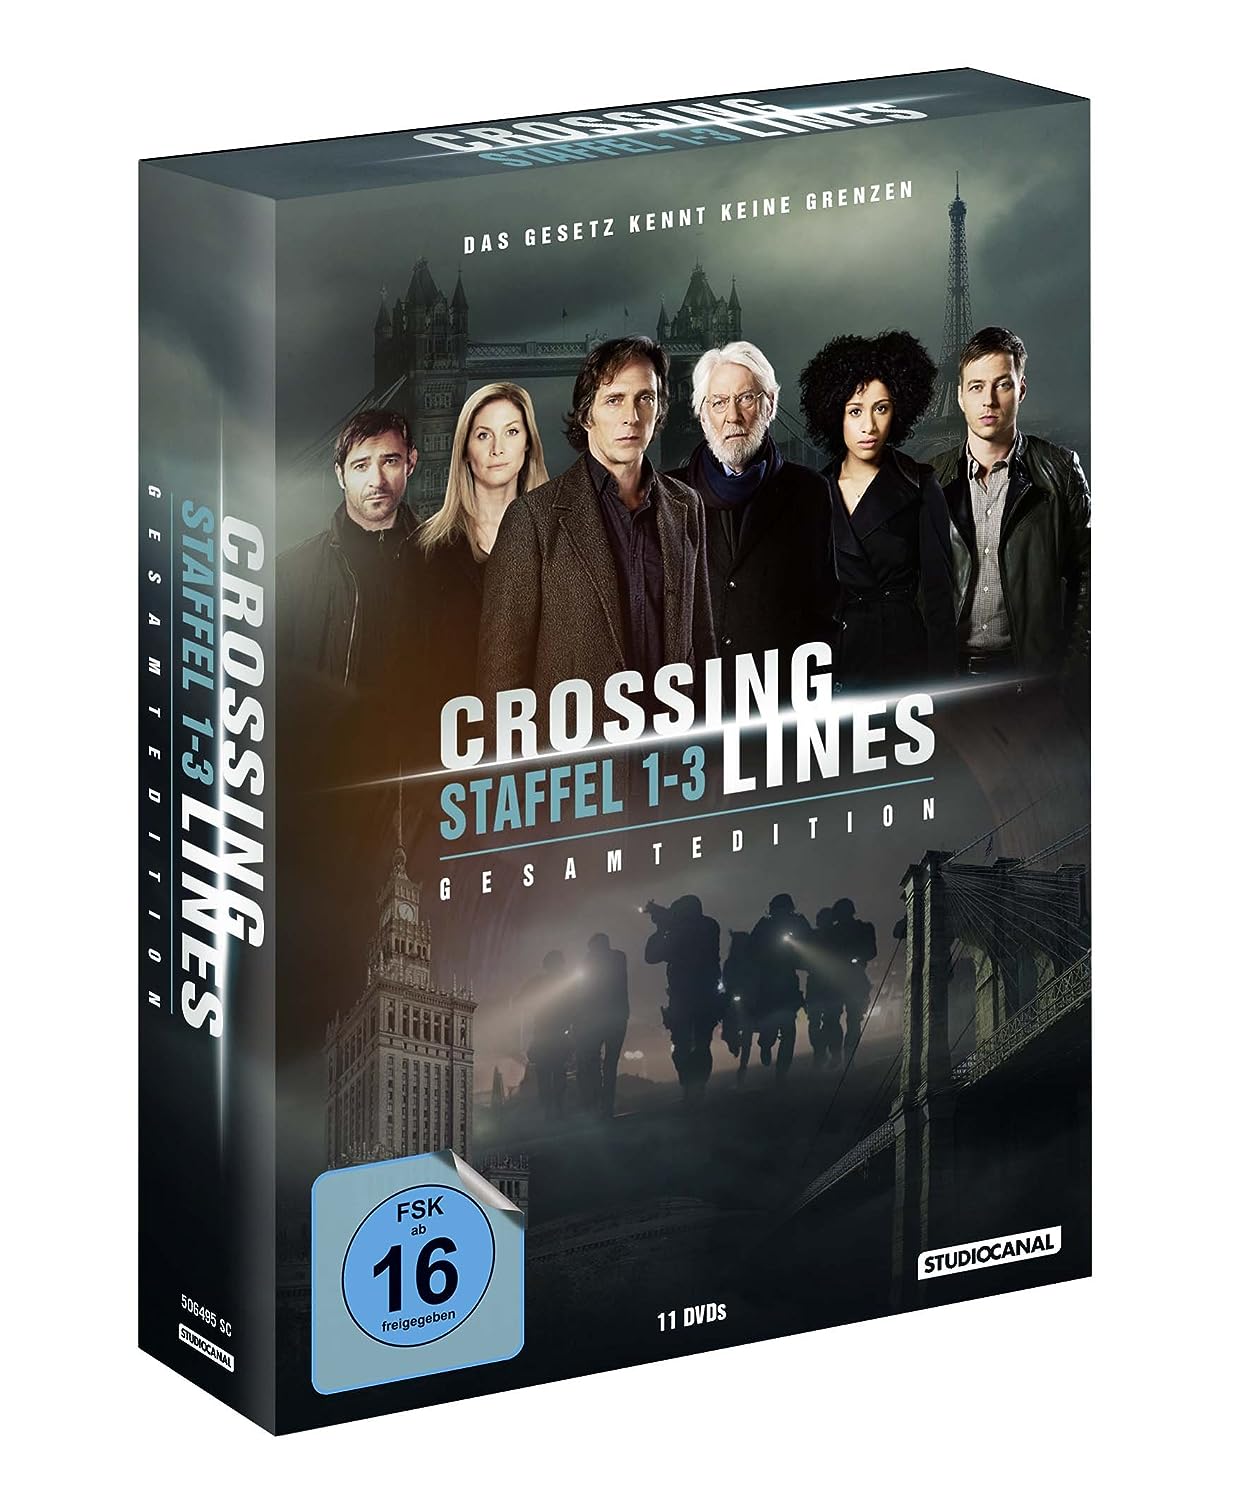 Crossing Lines - Staffel 1-3 - Gesamtedition (11 DVDs) Image 2